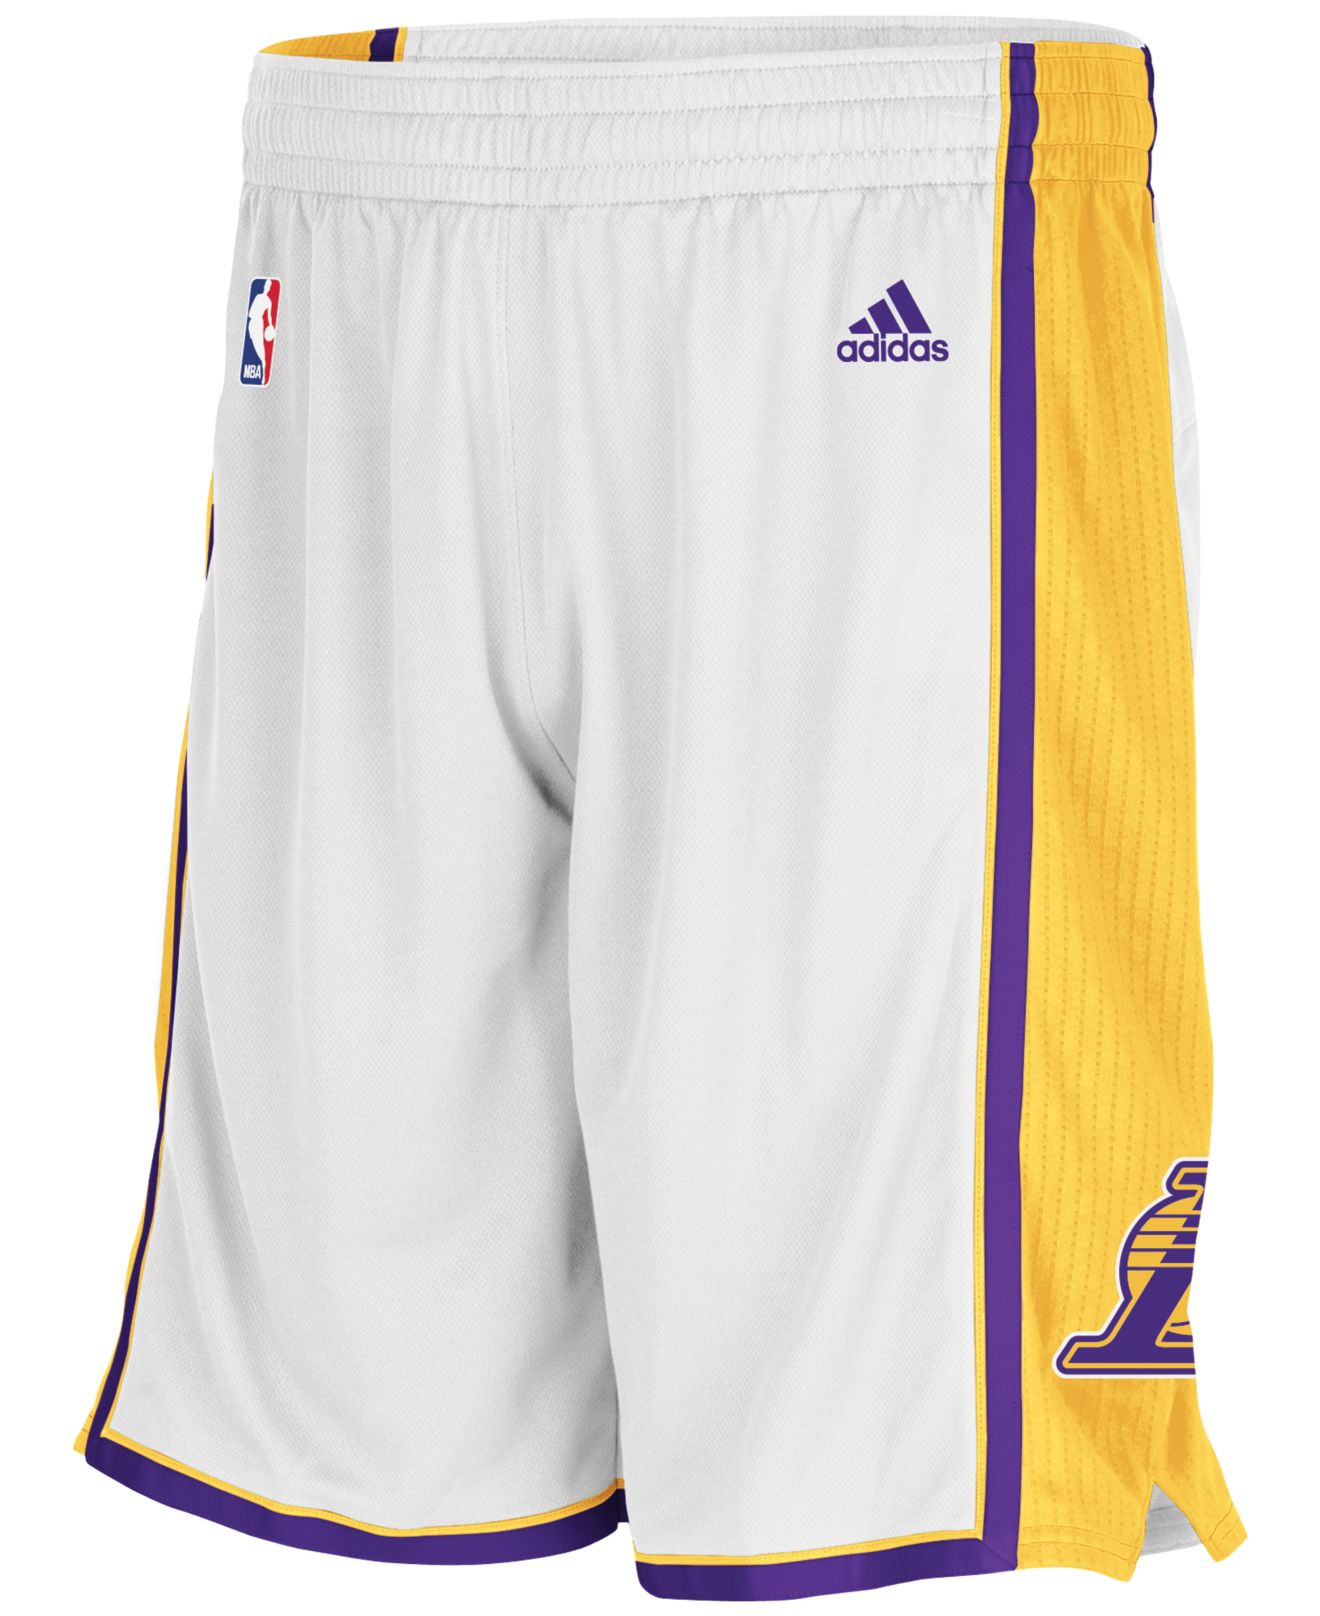 Lyst - Adidas Men'S Los Angeles Lakers 3G Swingman Shorts ...